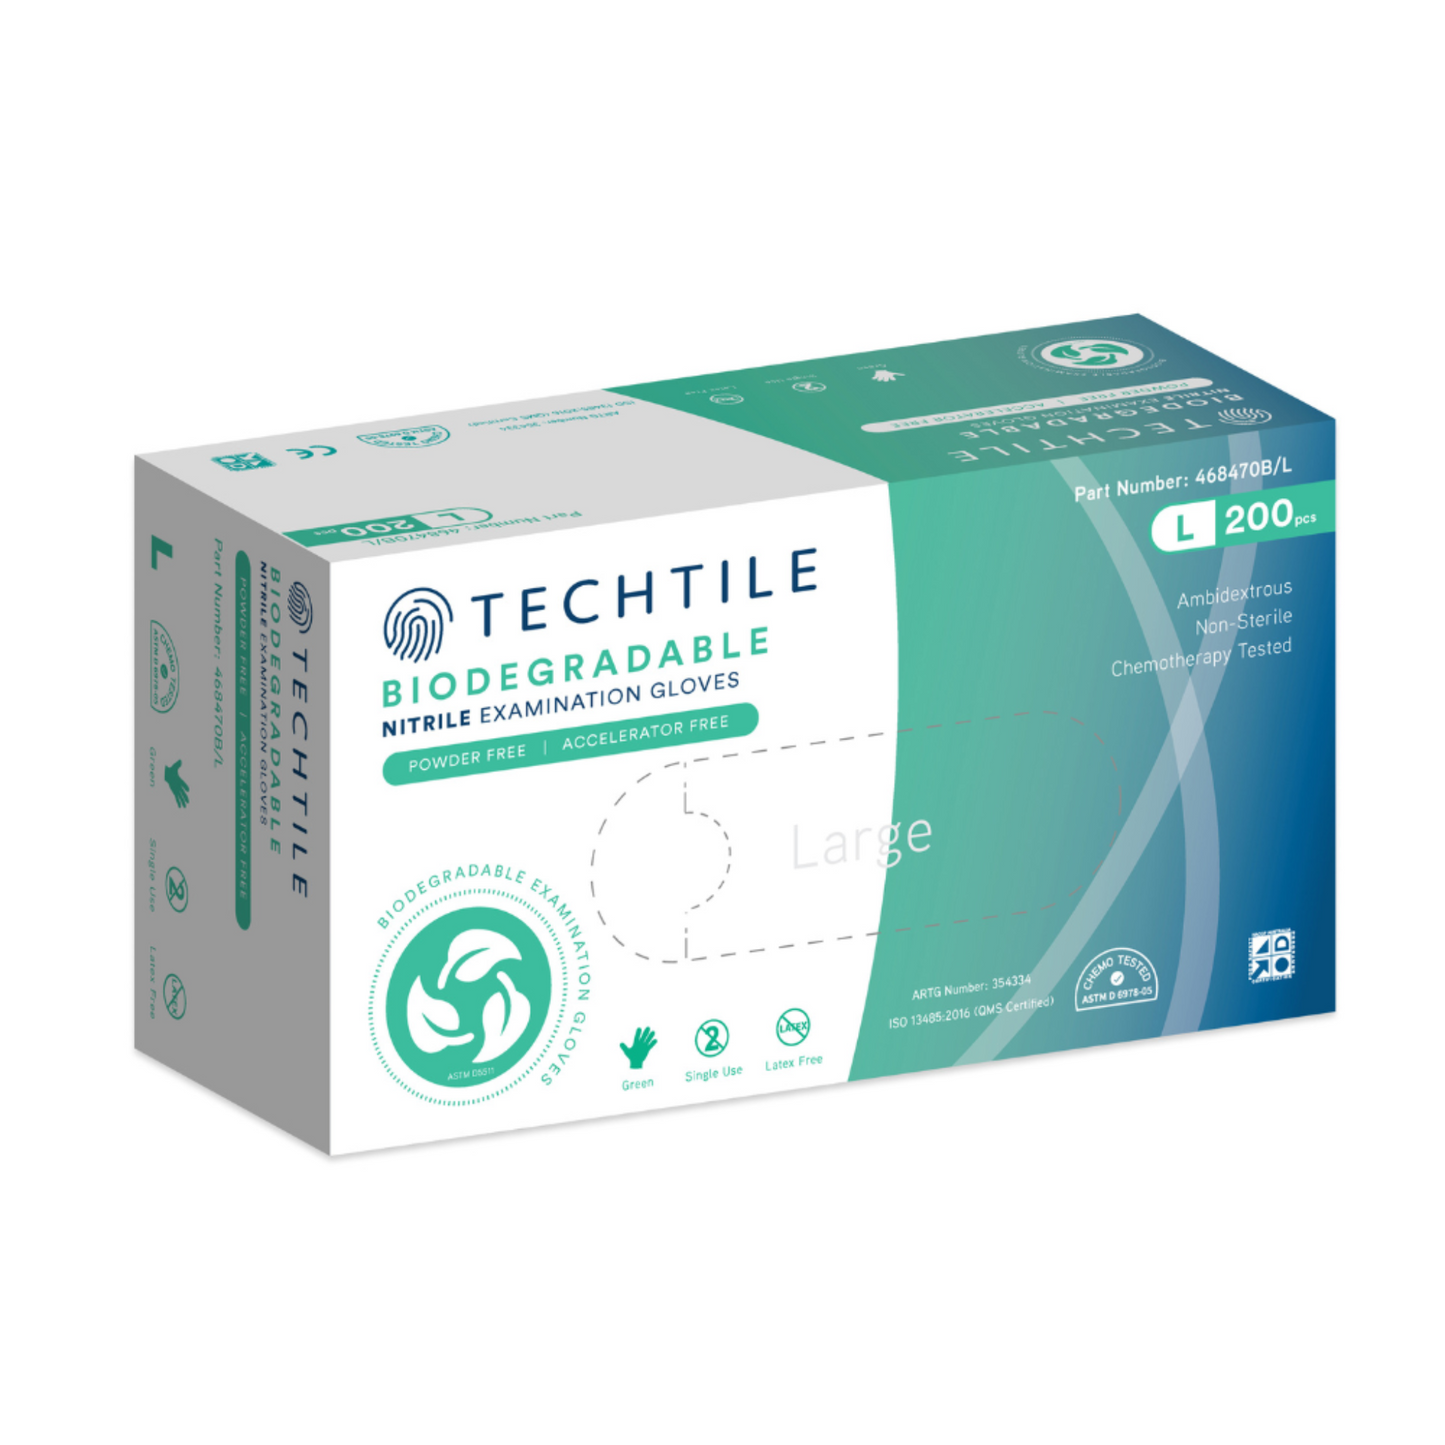 Techtile Biodegradable Nitrile Gloves - L